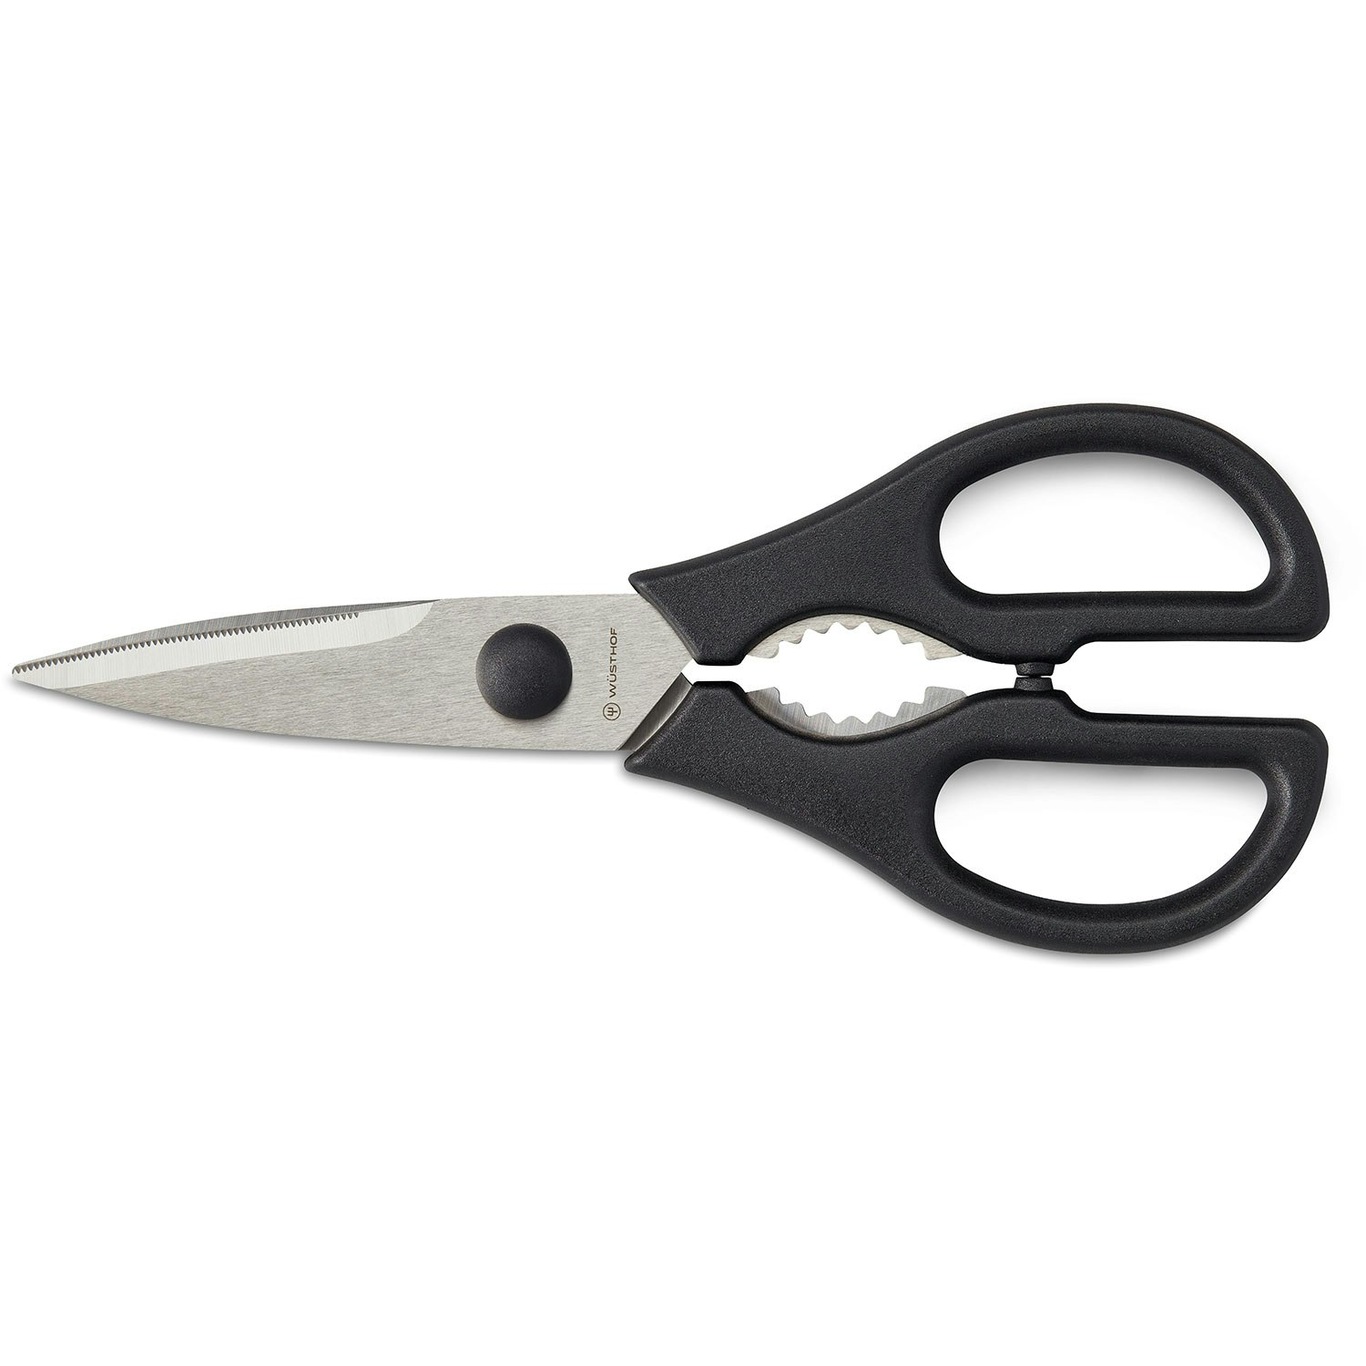 https://royaldesign.com/image/2/wusthof-kitchen-scissors-21-cm-black-0?w=800&quality=80